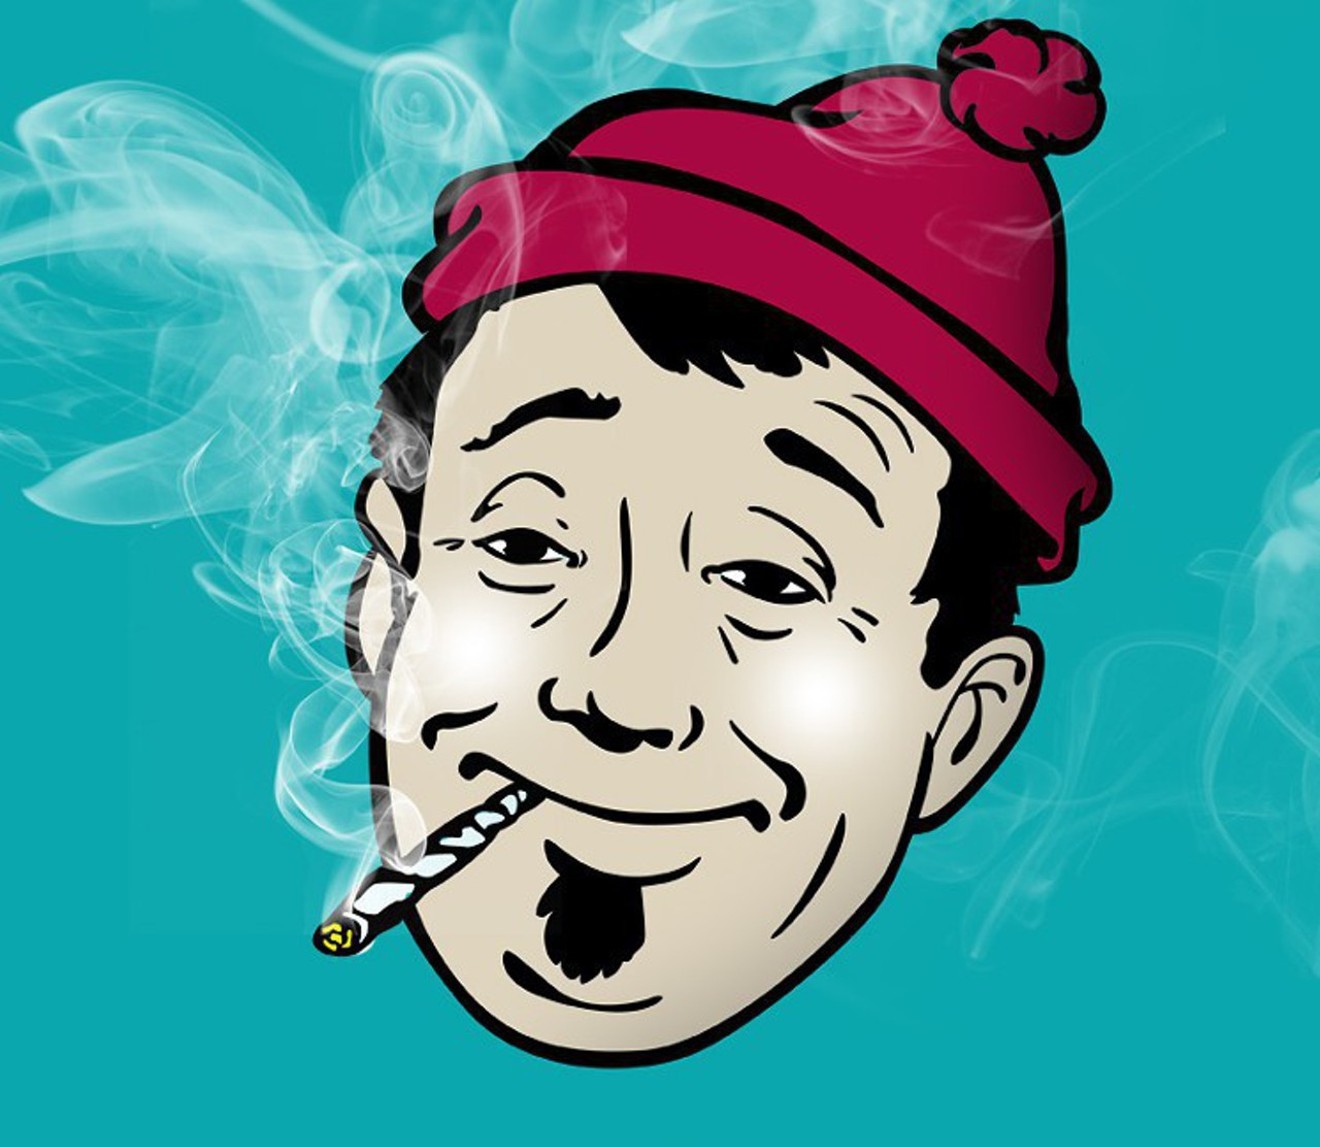 cartoon character smoking weed